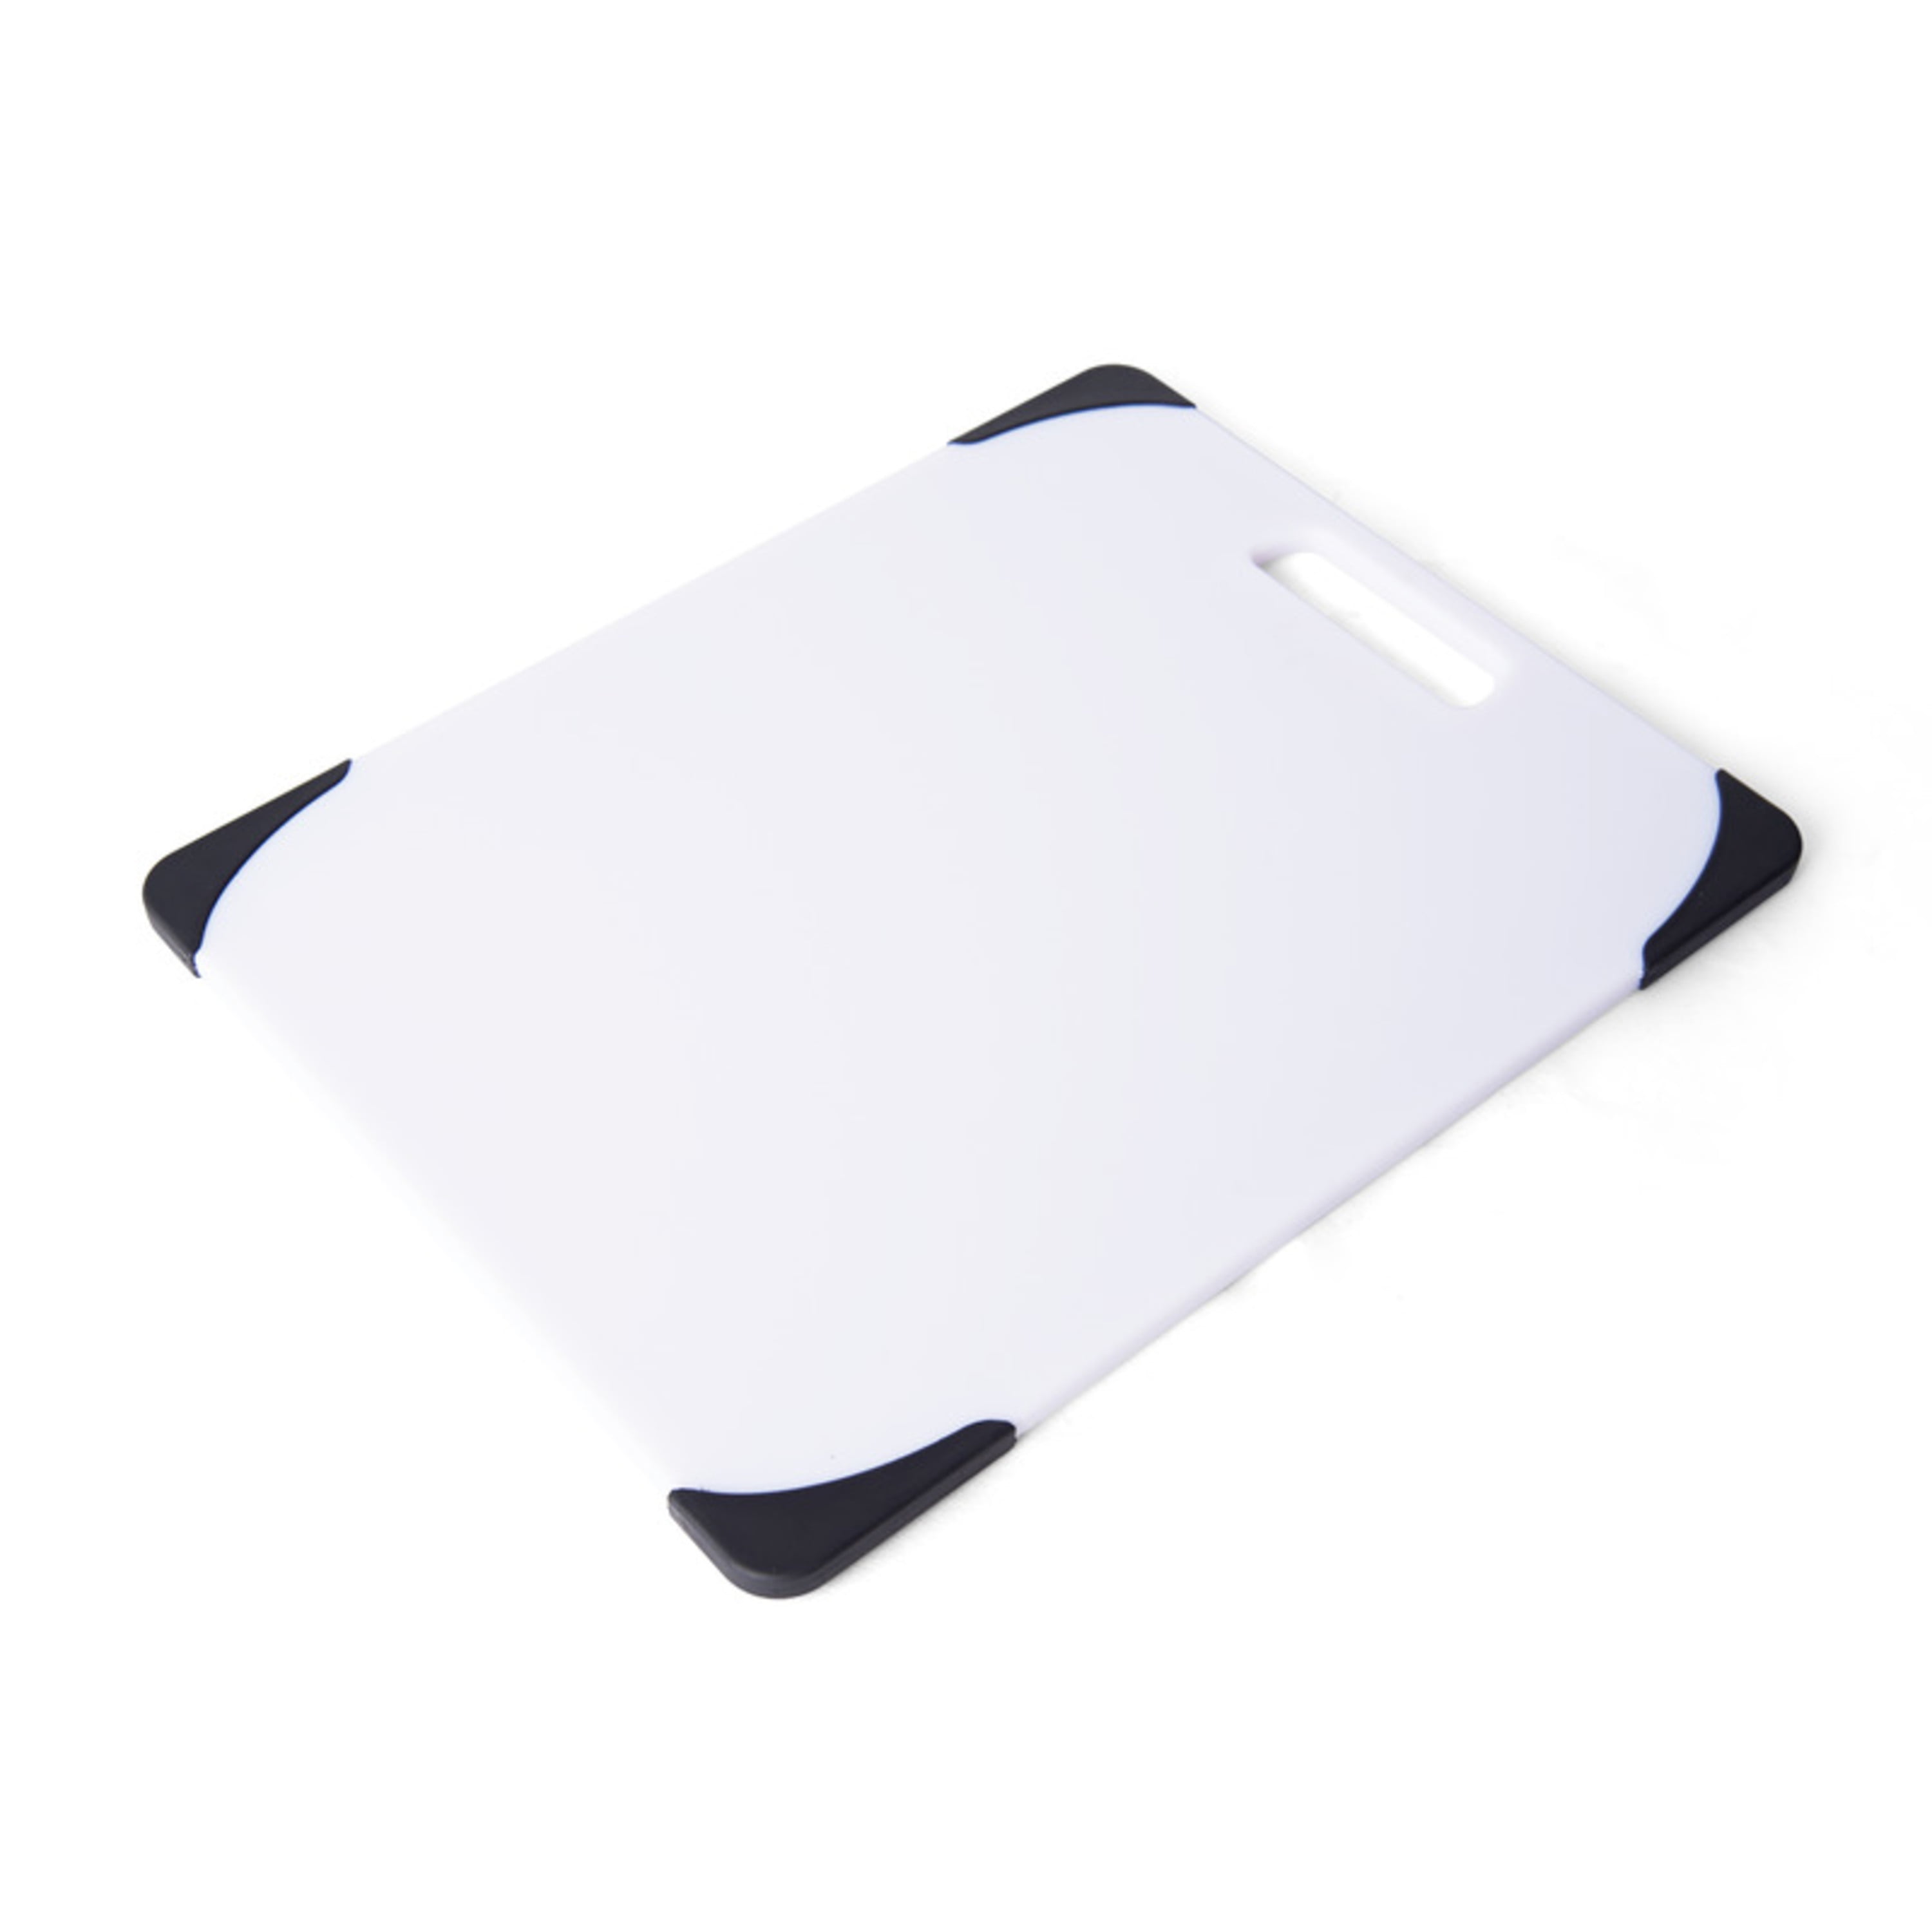 Farberware 11 inch by 14 inch White Poly Cutting Board